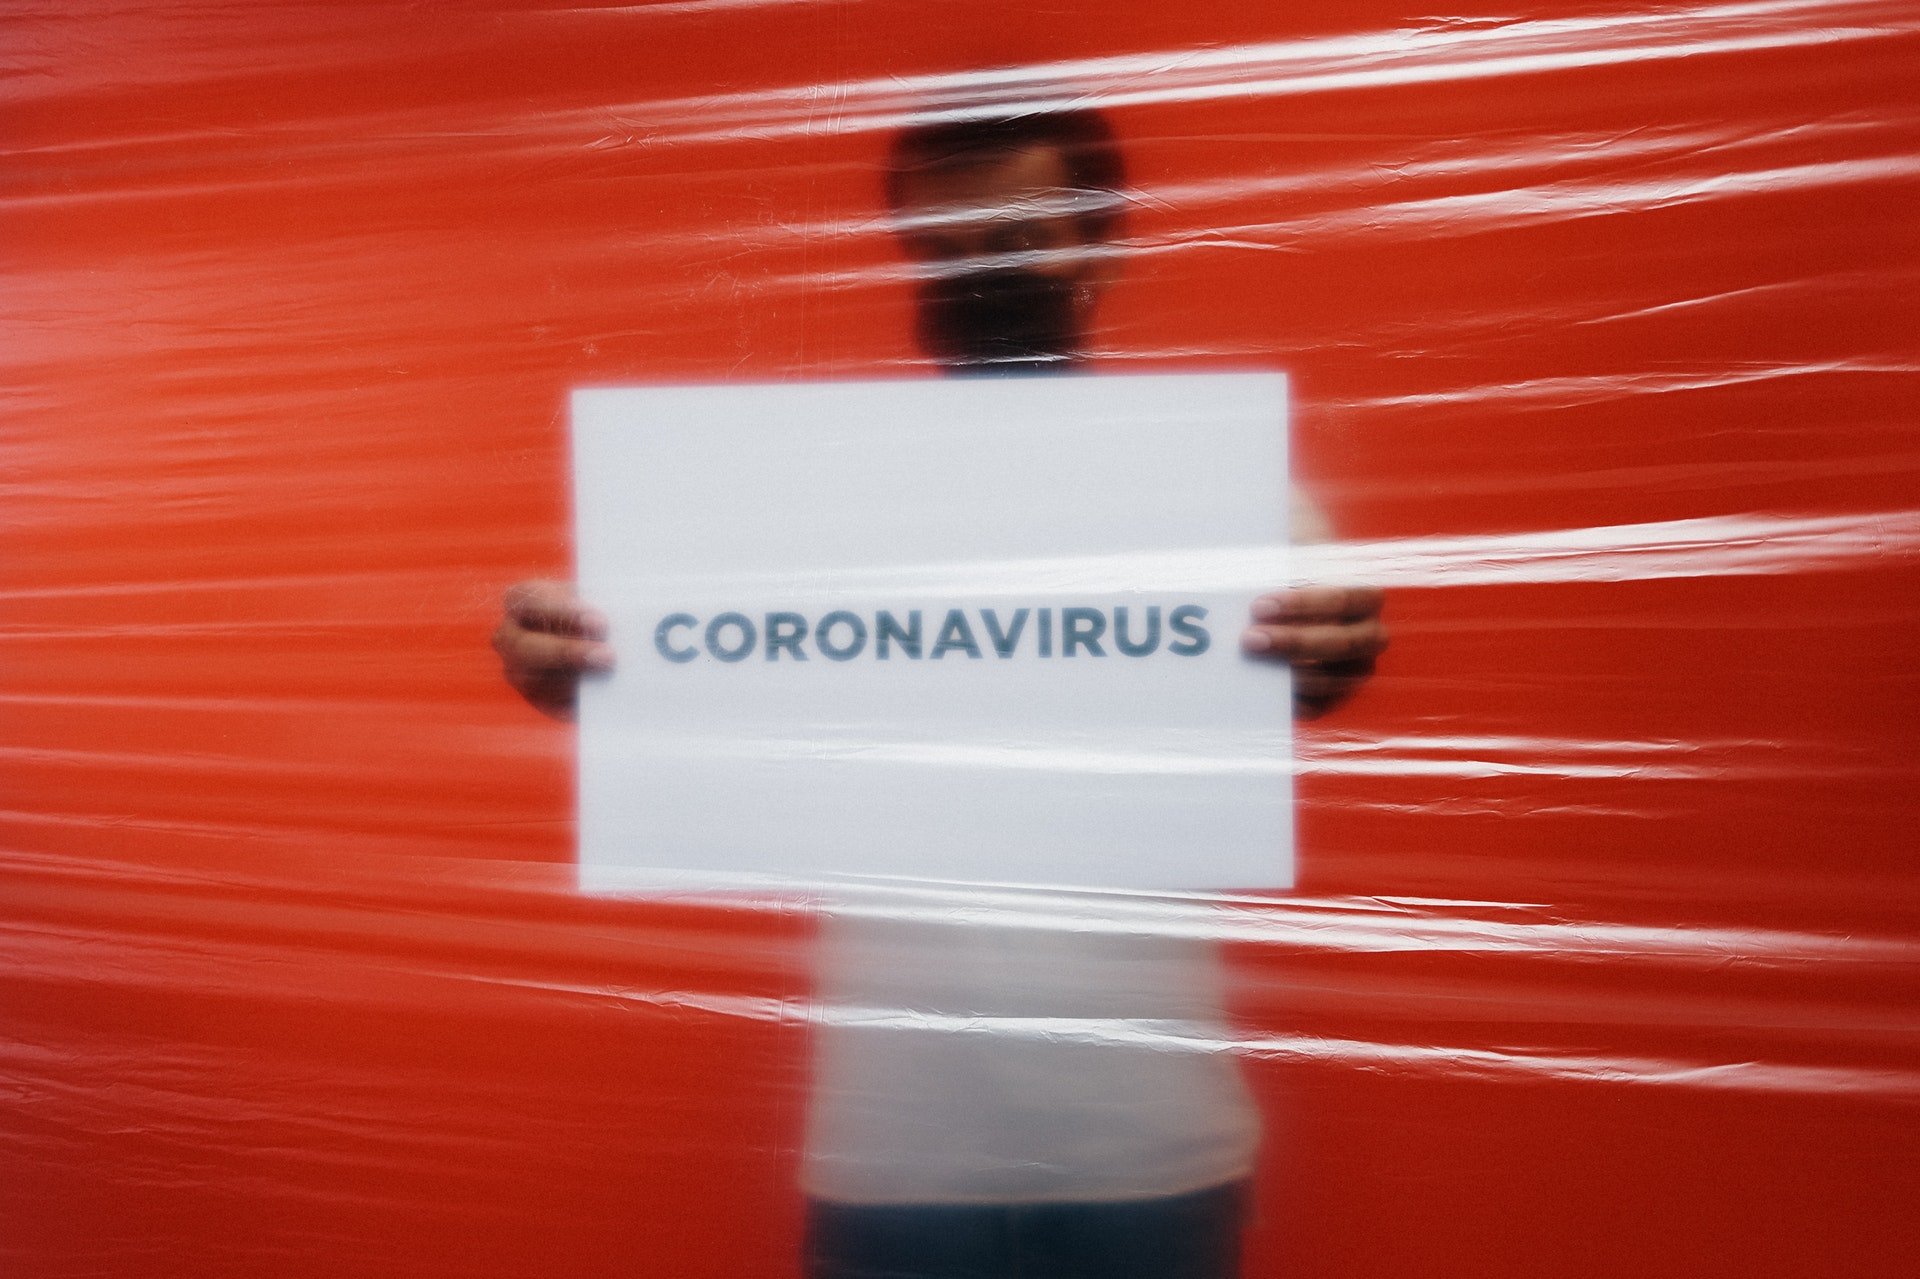 Coronavirus 2020 image | Photo: Pexels/cottonbro